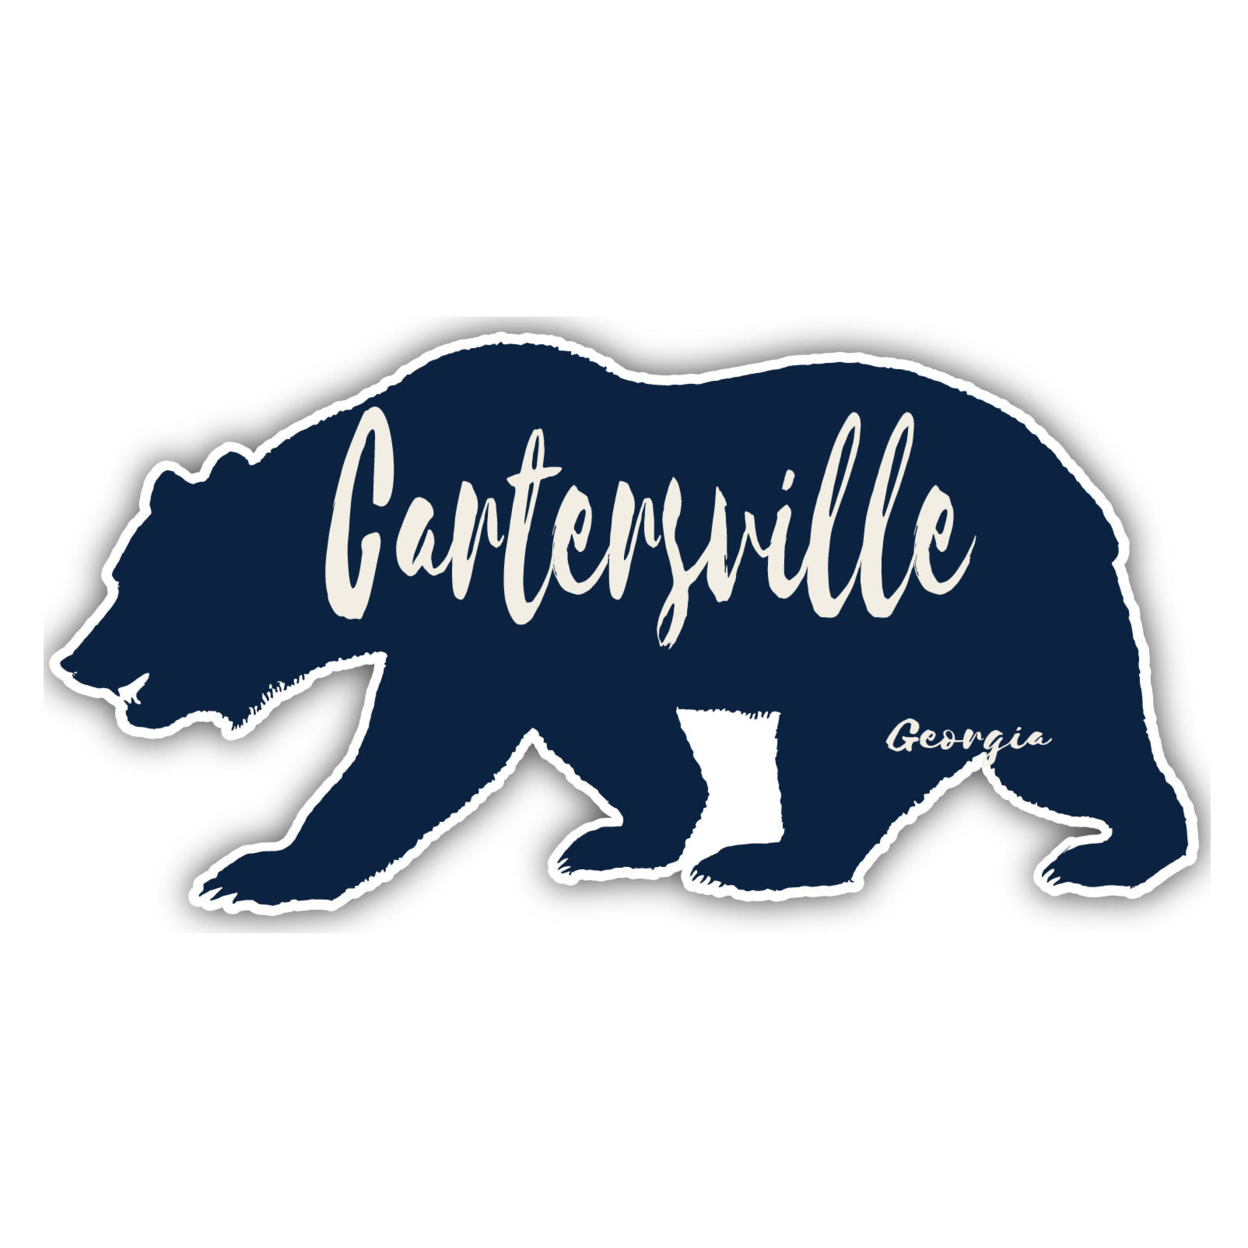 Cartersville Georgia Souvenir Decorative Stickers (Choose Theme And Size) - 4-Pack, 12-Inch, Bear